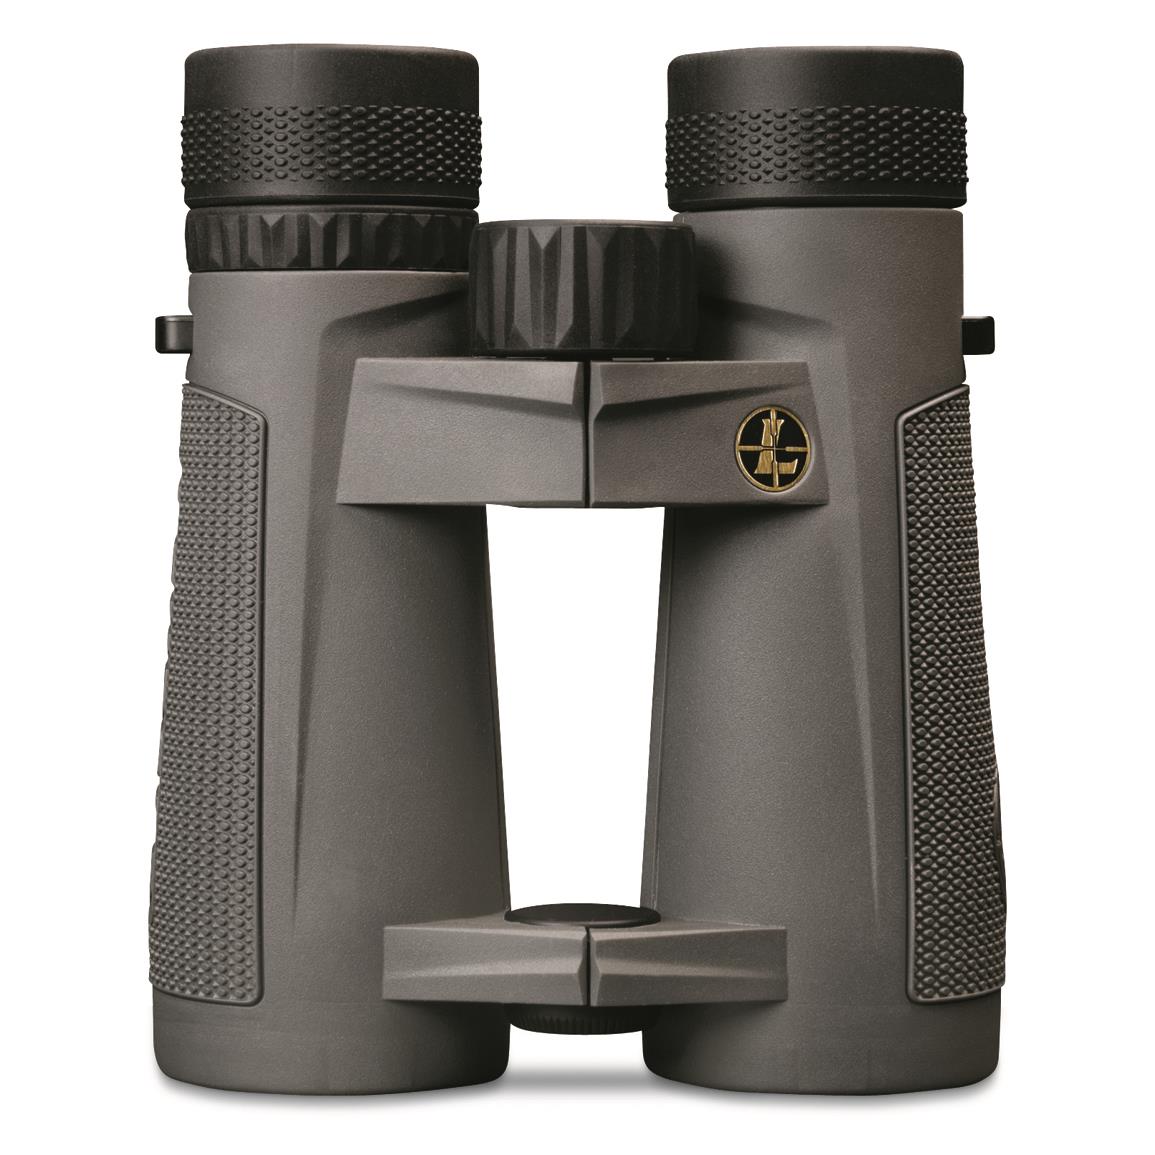 Leupold BX-5 Santiam HD 10x42mm Binoculars, Gray